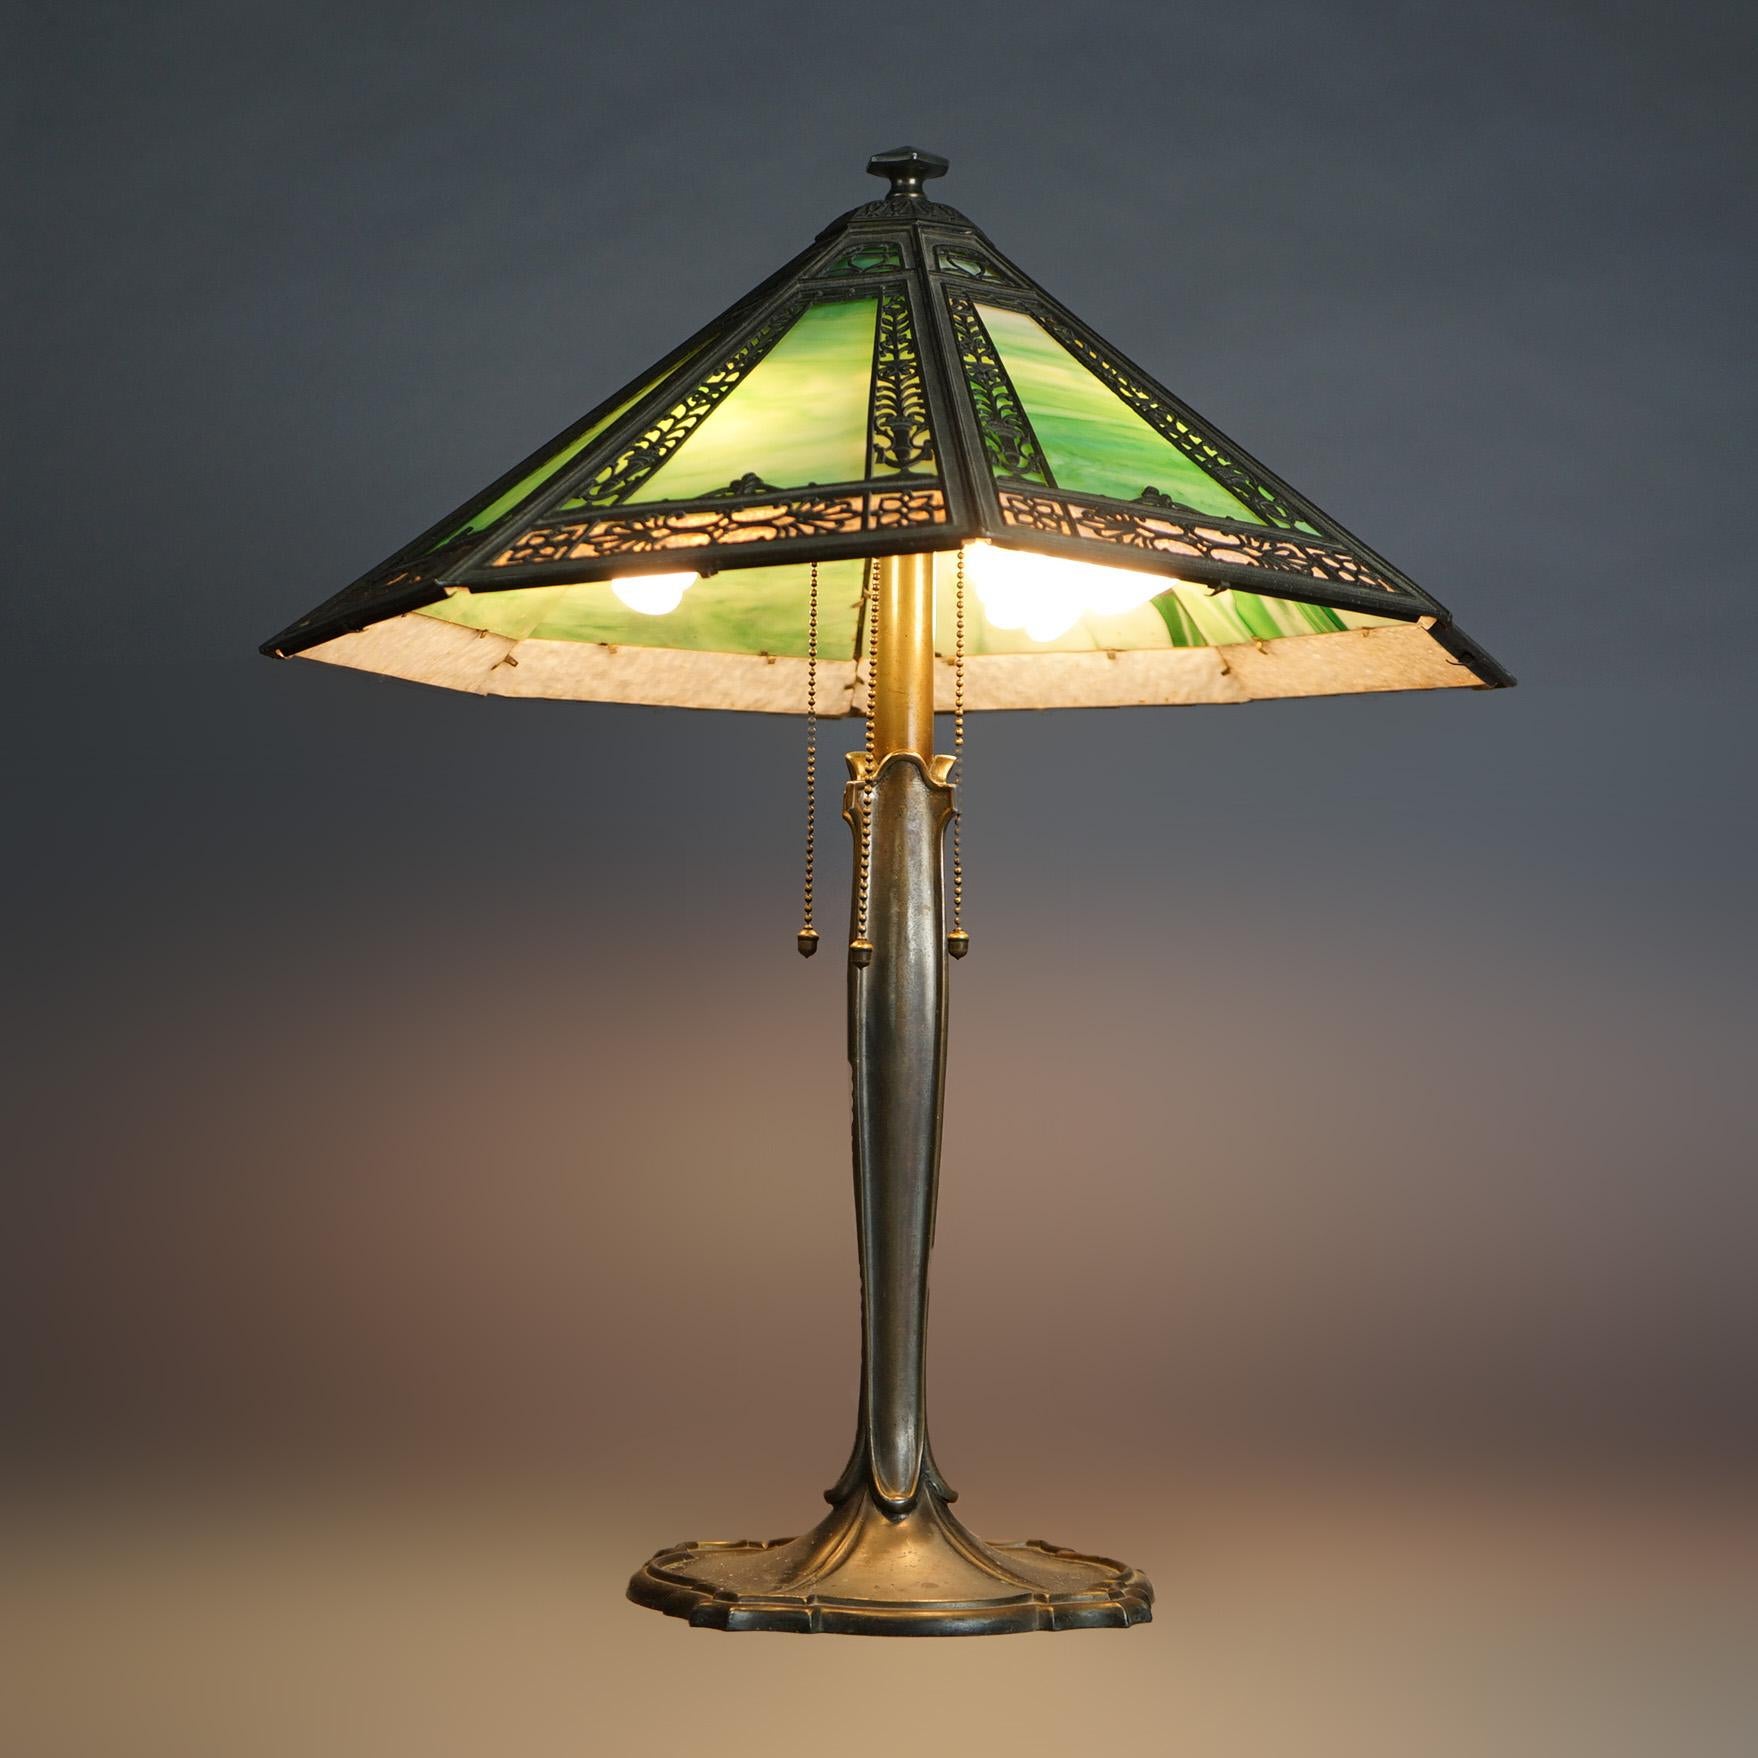 Bradley & Hubbard Signiert Arts & Craft Schlackenglas 4-Light Panel Lampe C1920

Maße: 23''H x 19''B x 19''T